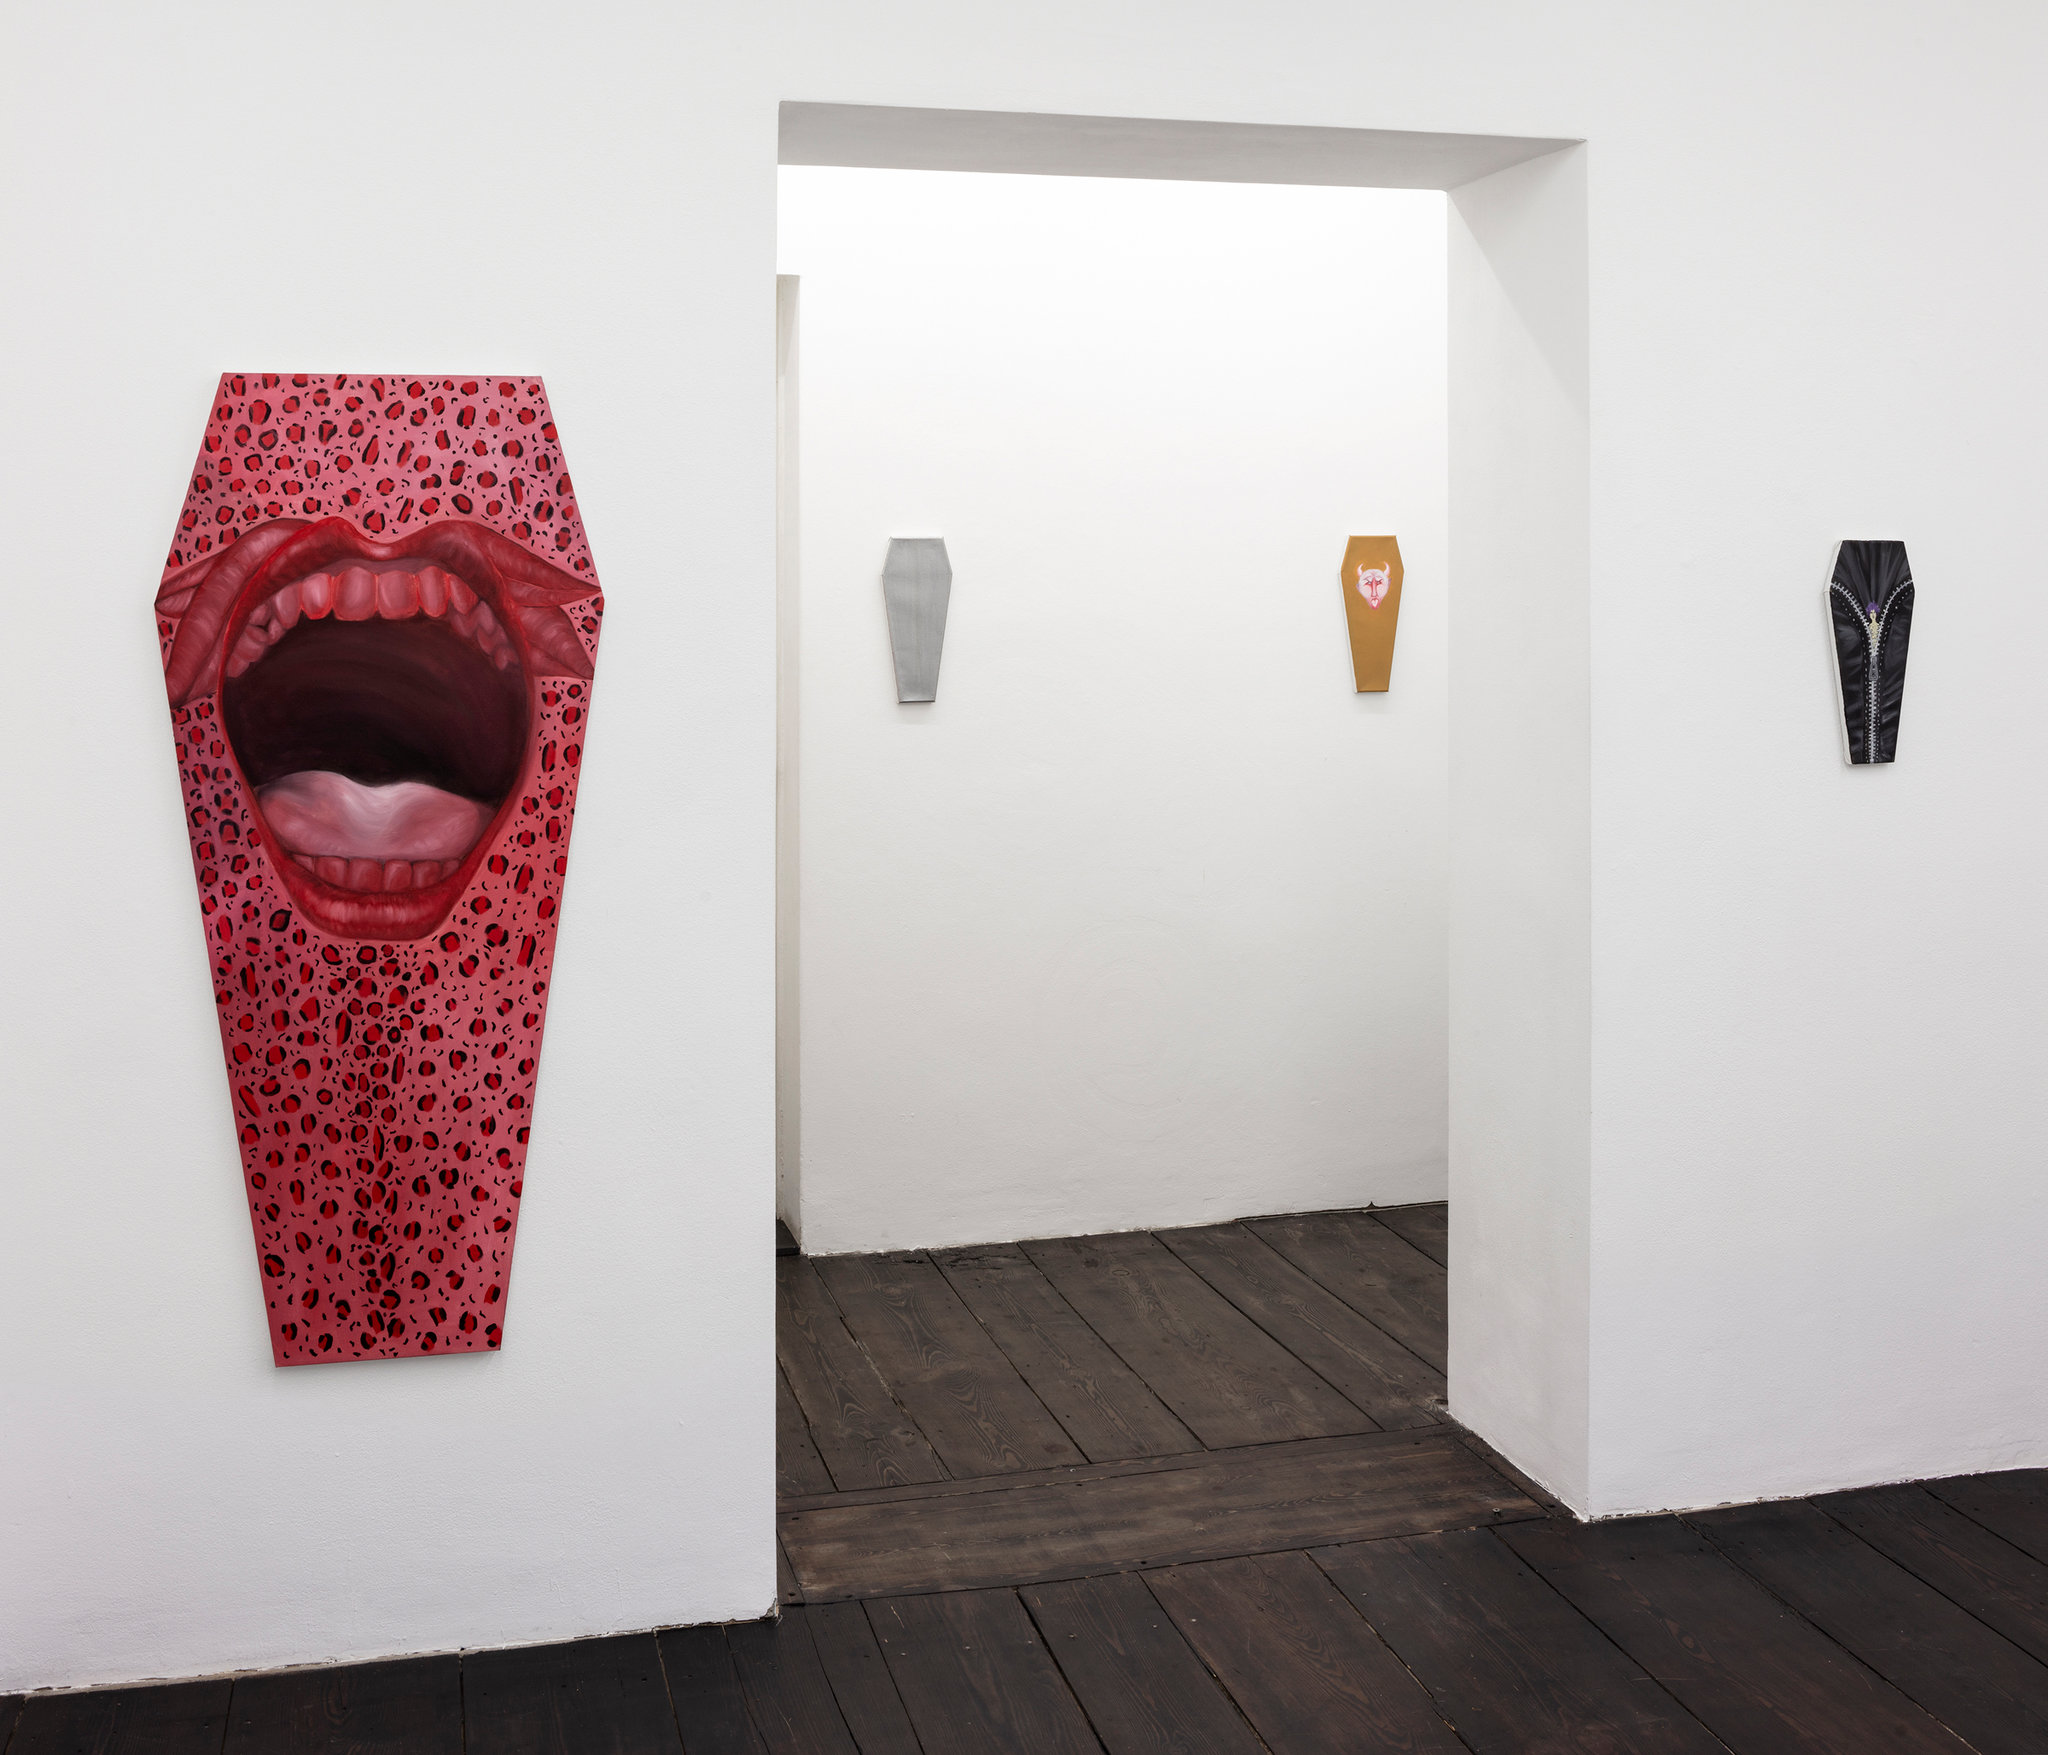 Quintessa Matranga, "rhetoric", SANDY BROWN, Berlin, 2018, installation view